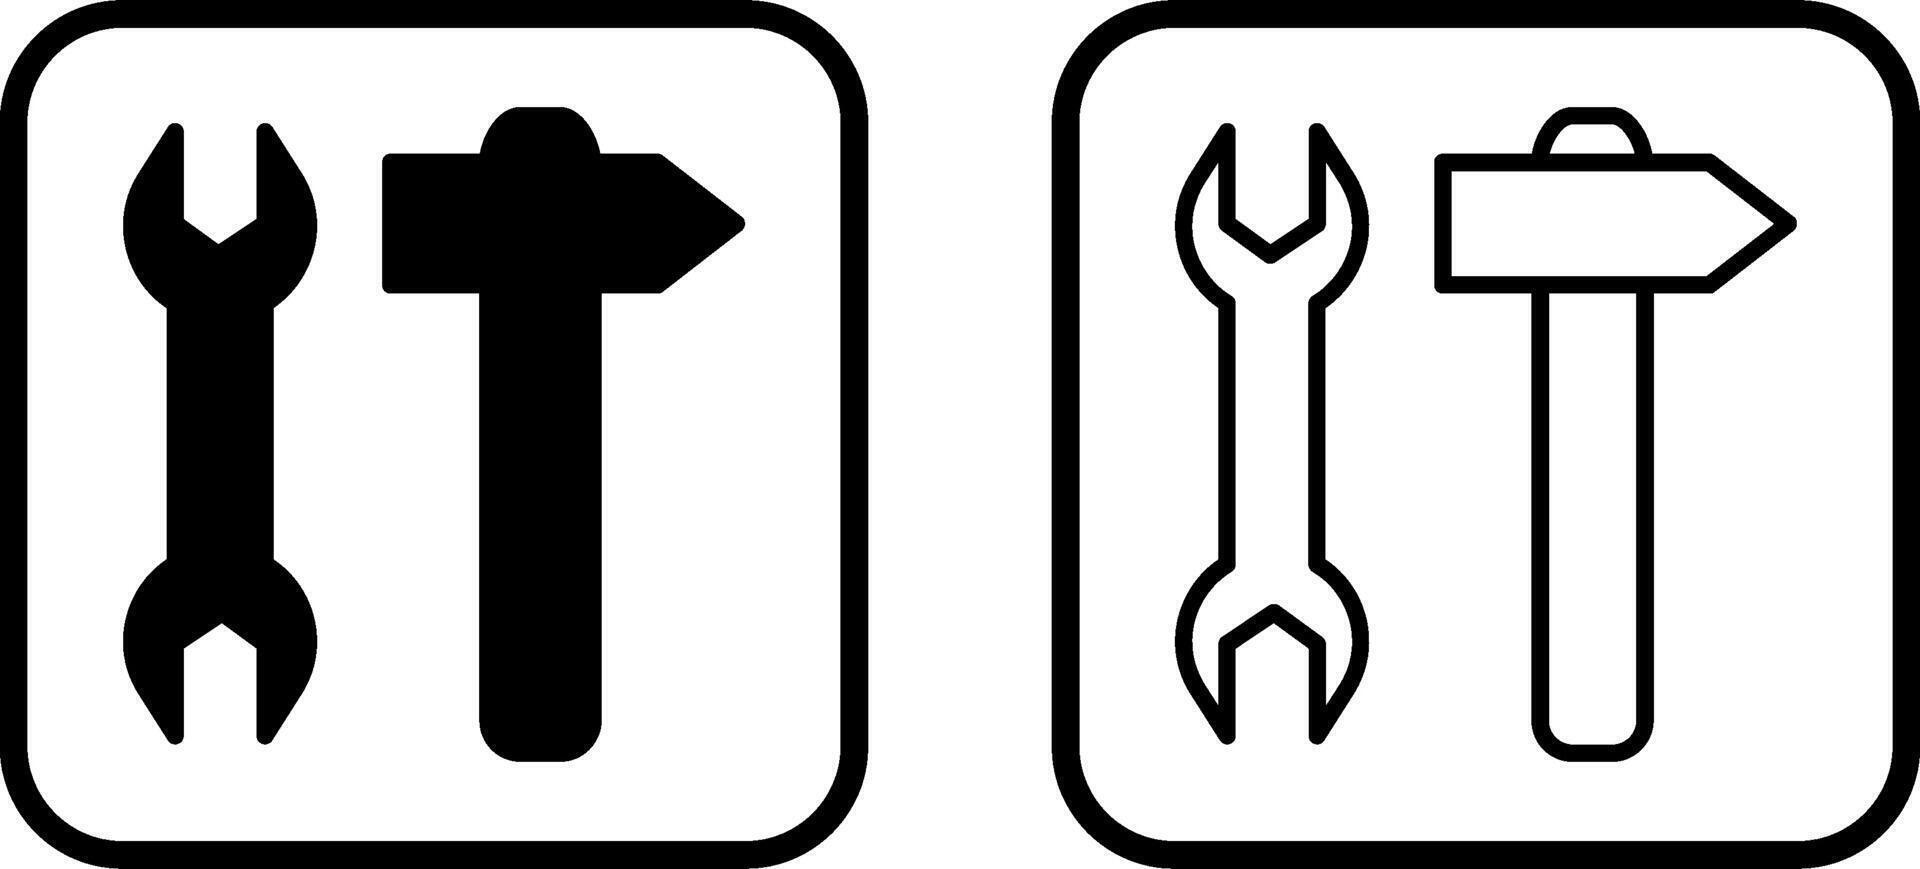 Werkzeuge-Vektor-Symbol vektor